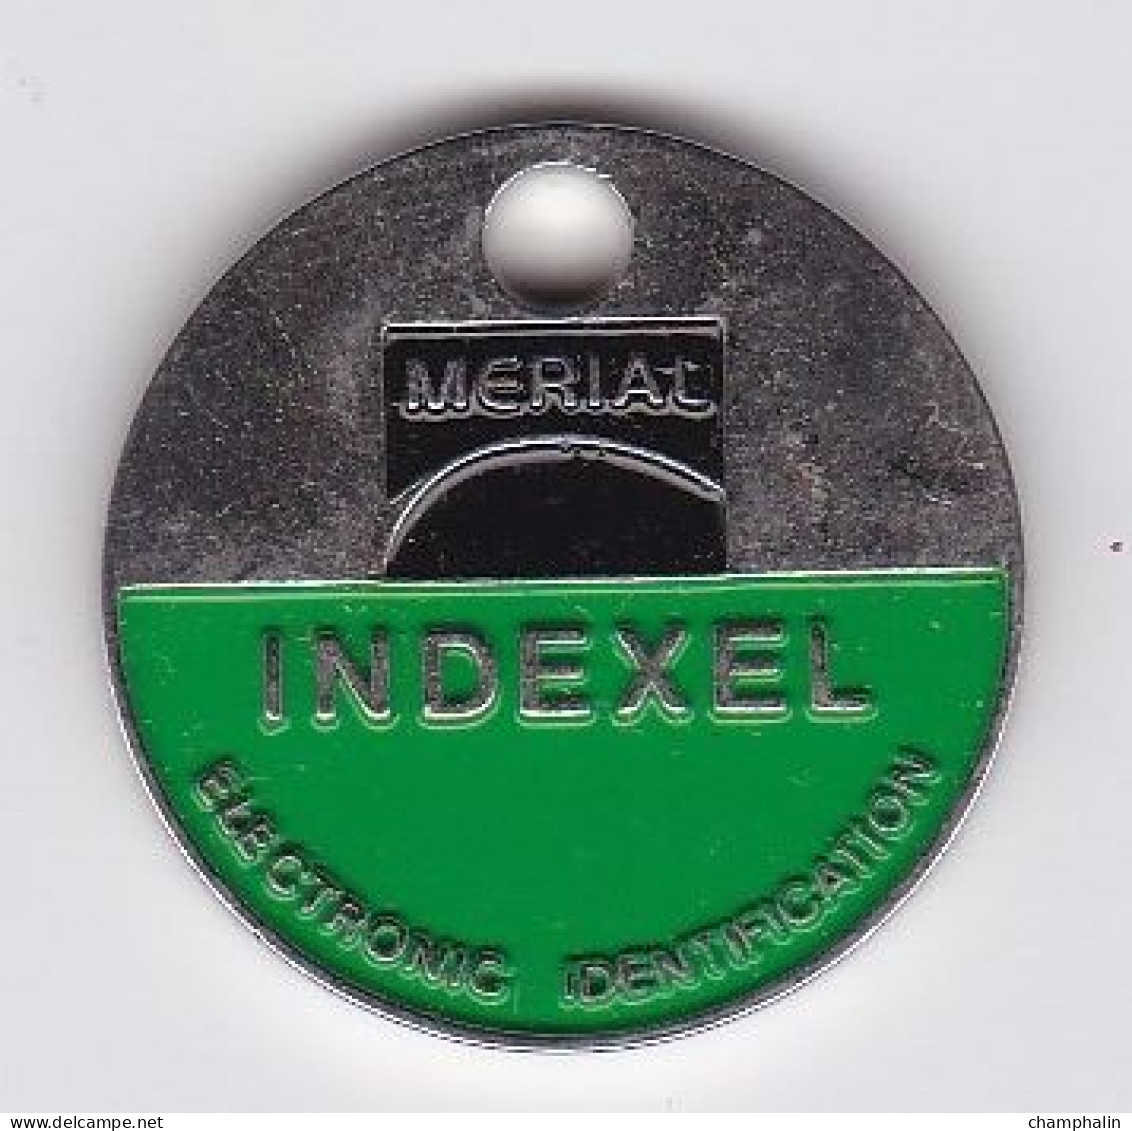 Jeton De Caddie En Métal - Angleterre - Merial Indexel - Electronic Identification - Identification électronique Animaux - Trolley Token/Shopping Trolley Chip